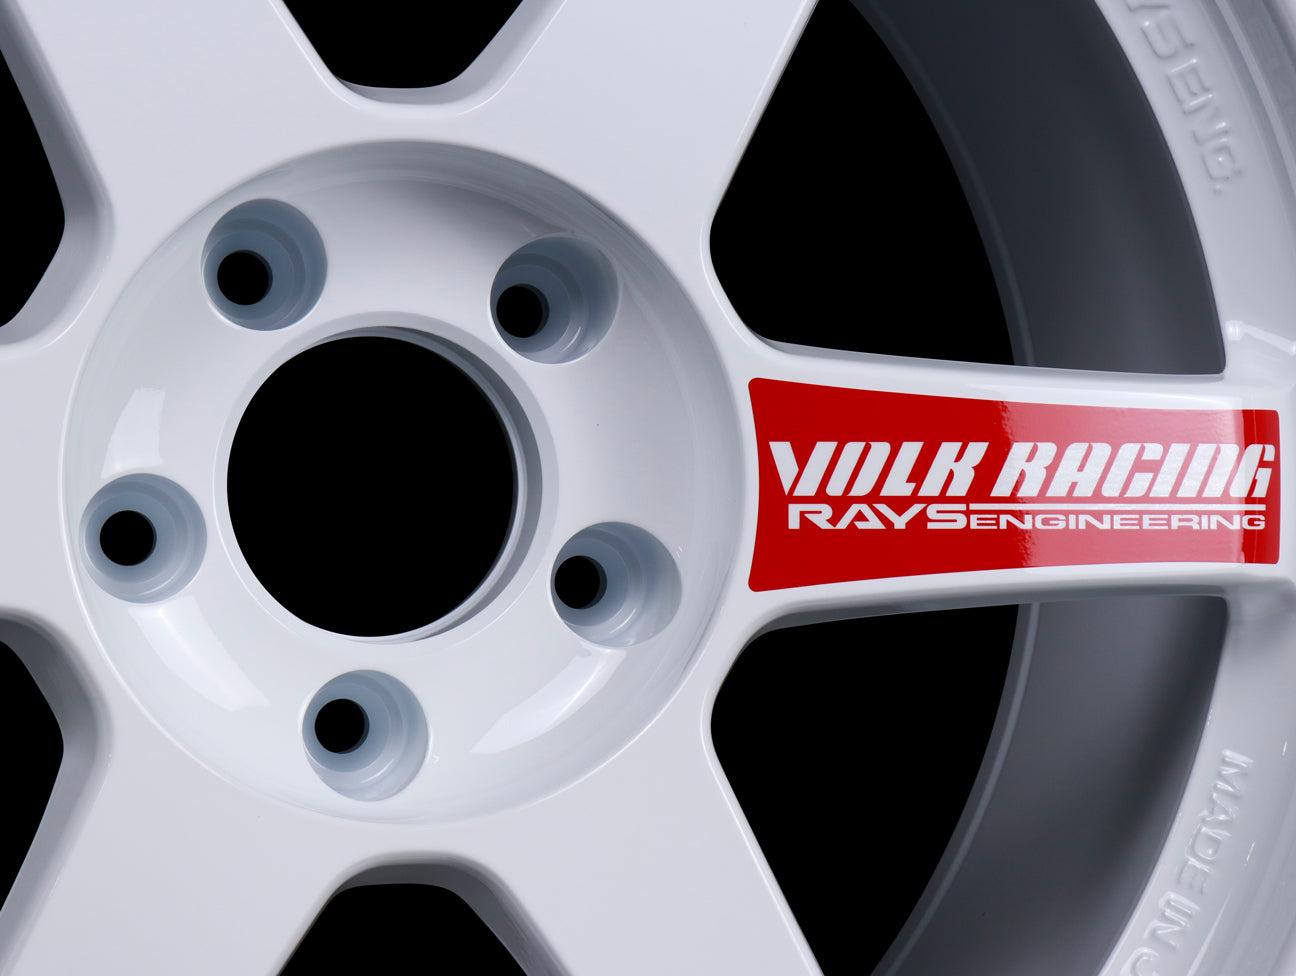 Volk Racing TE37SL Super Lap Edition - Dash White 18x9.5 / 5x114 / +40